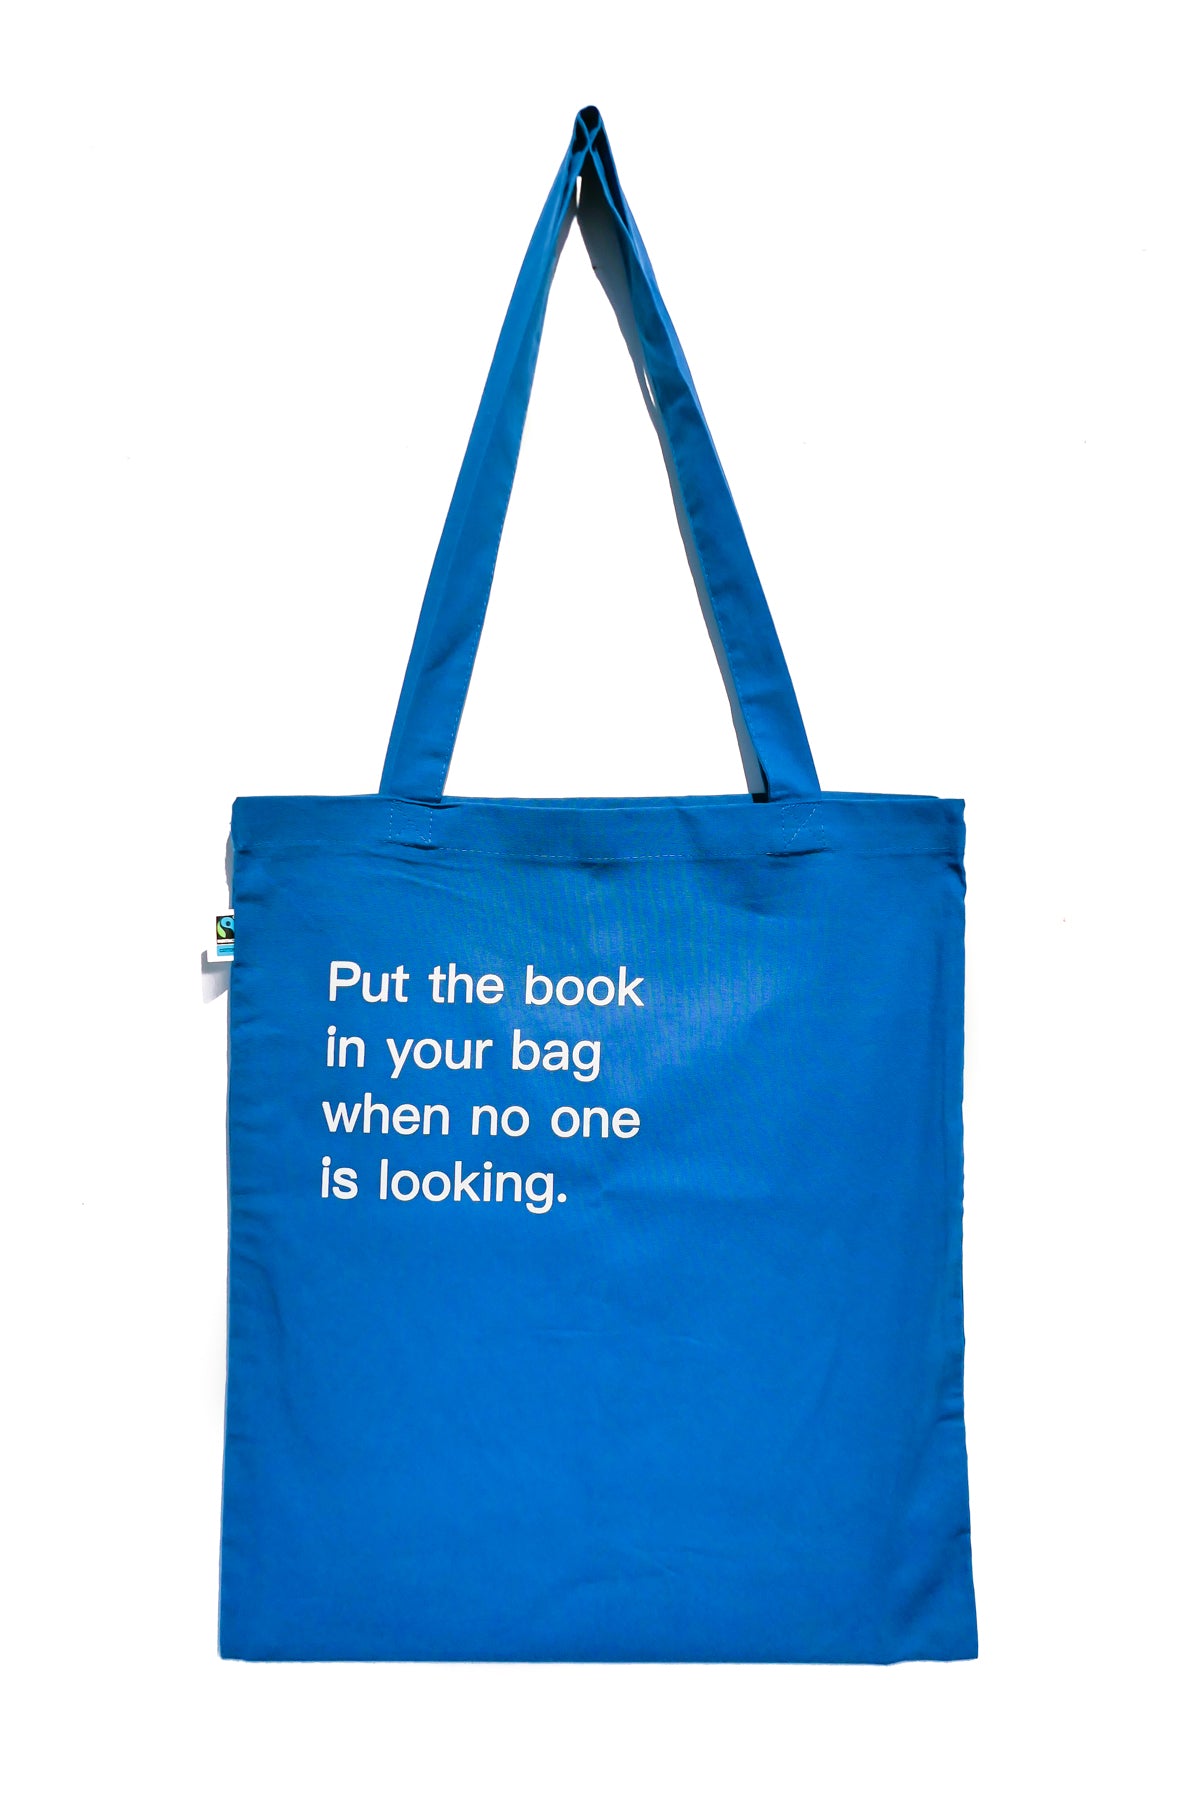 David Horvitz - Comment voler des livres / How to shoplift books (Tote bag)